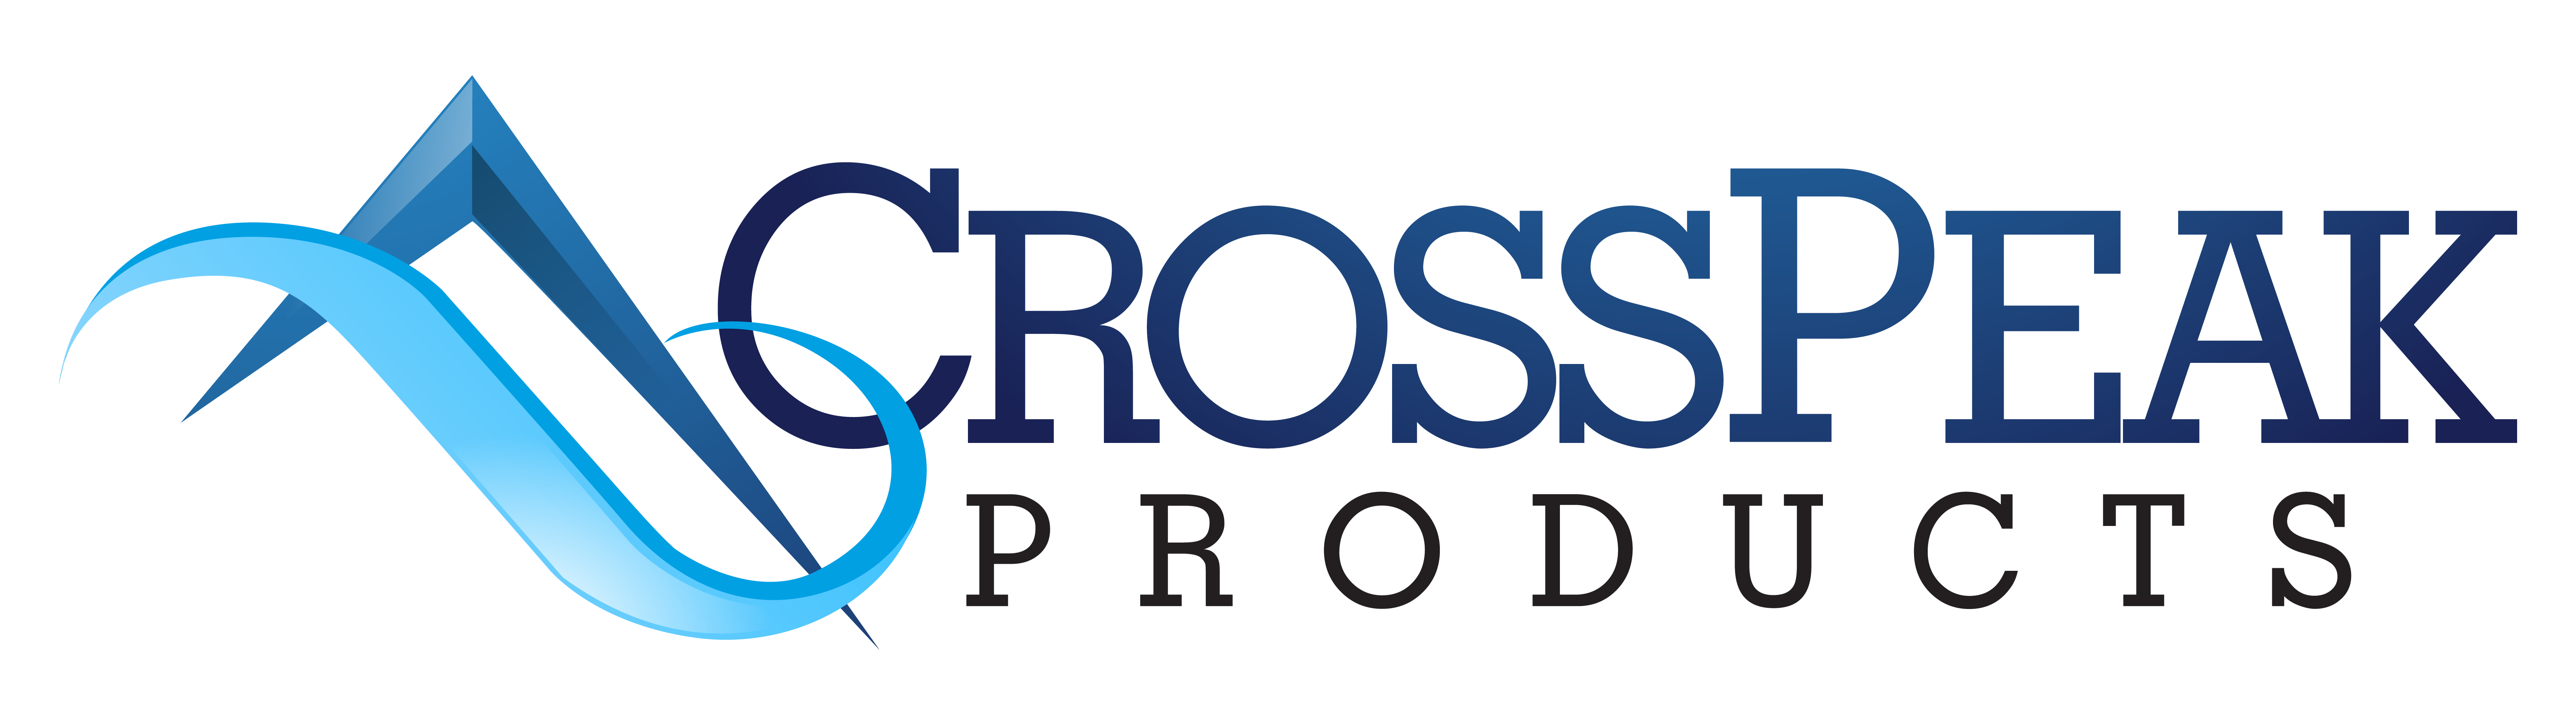 Cross Peak Products Logo